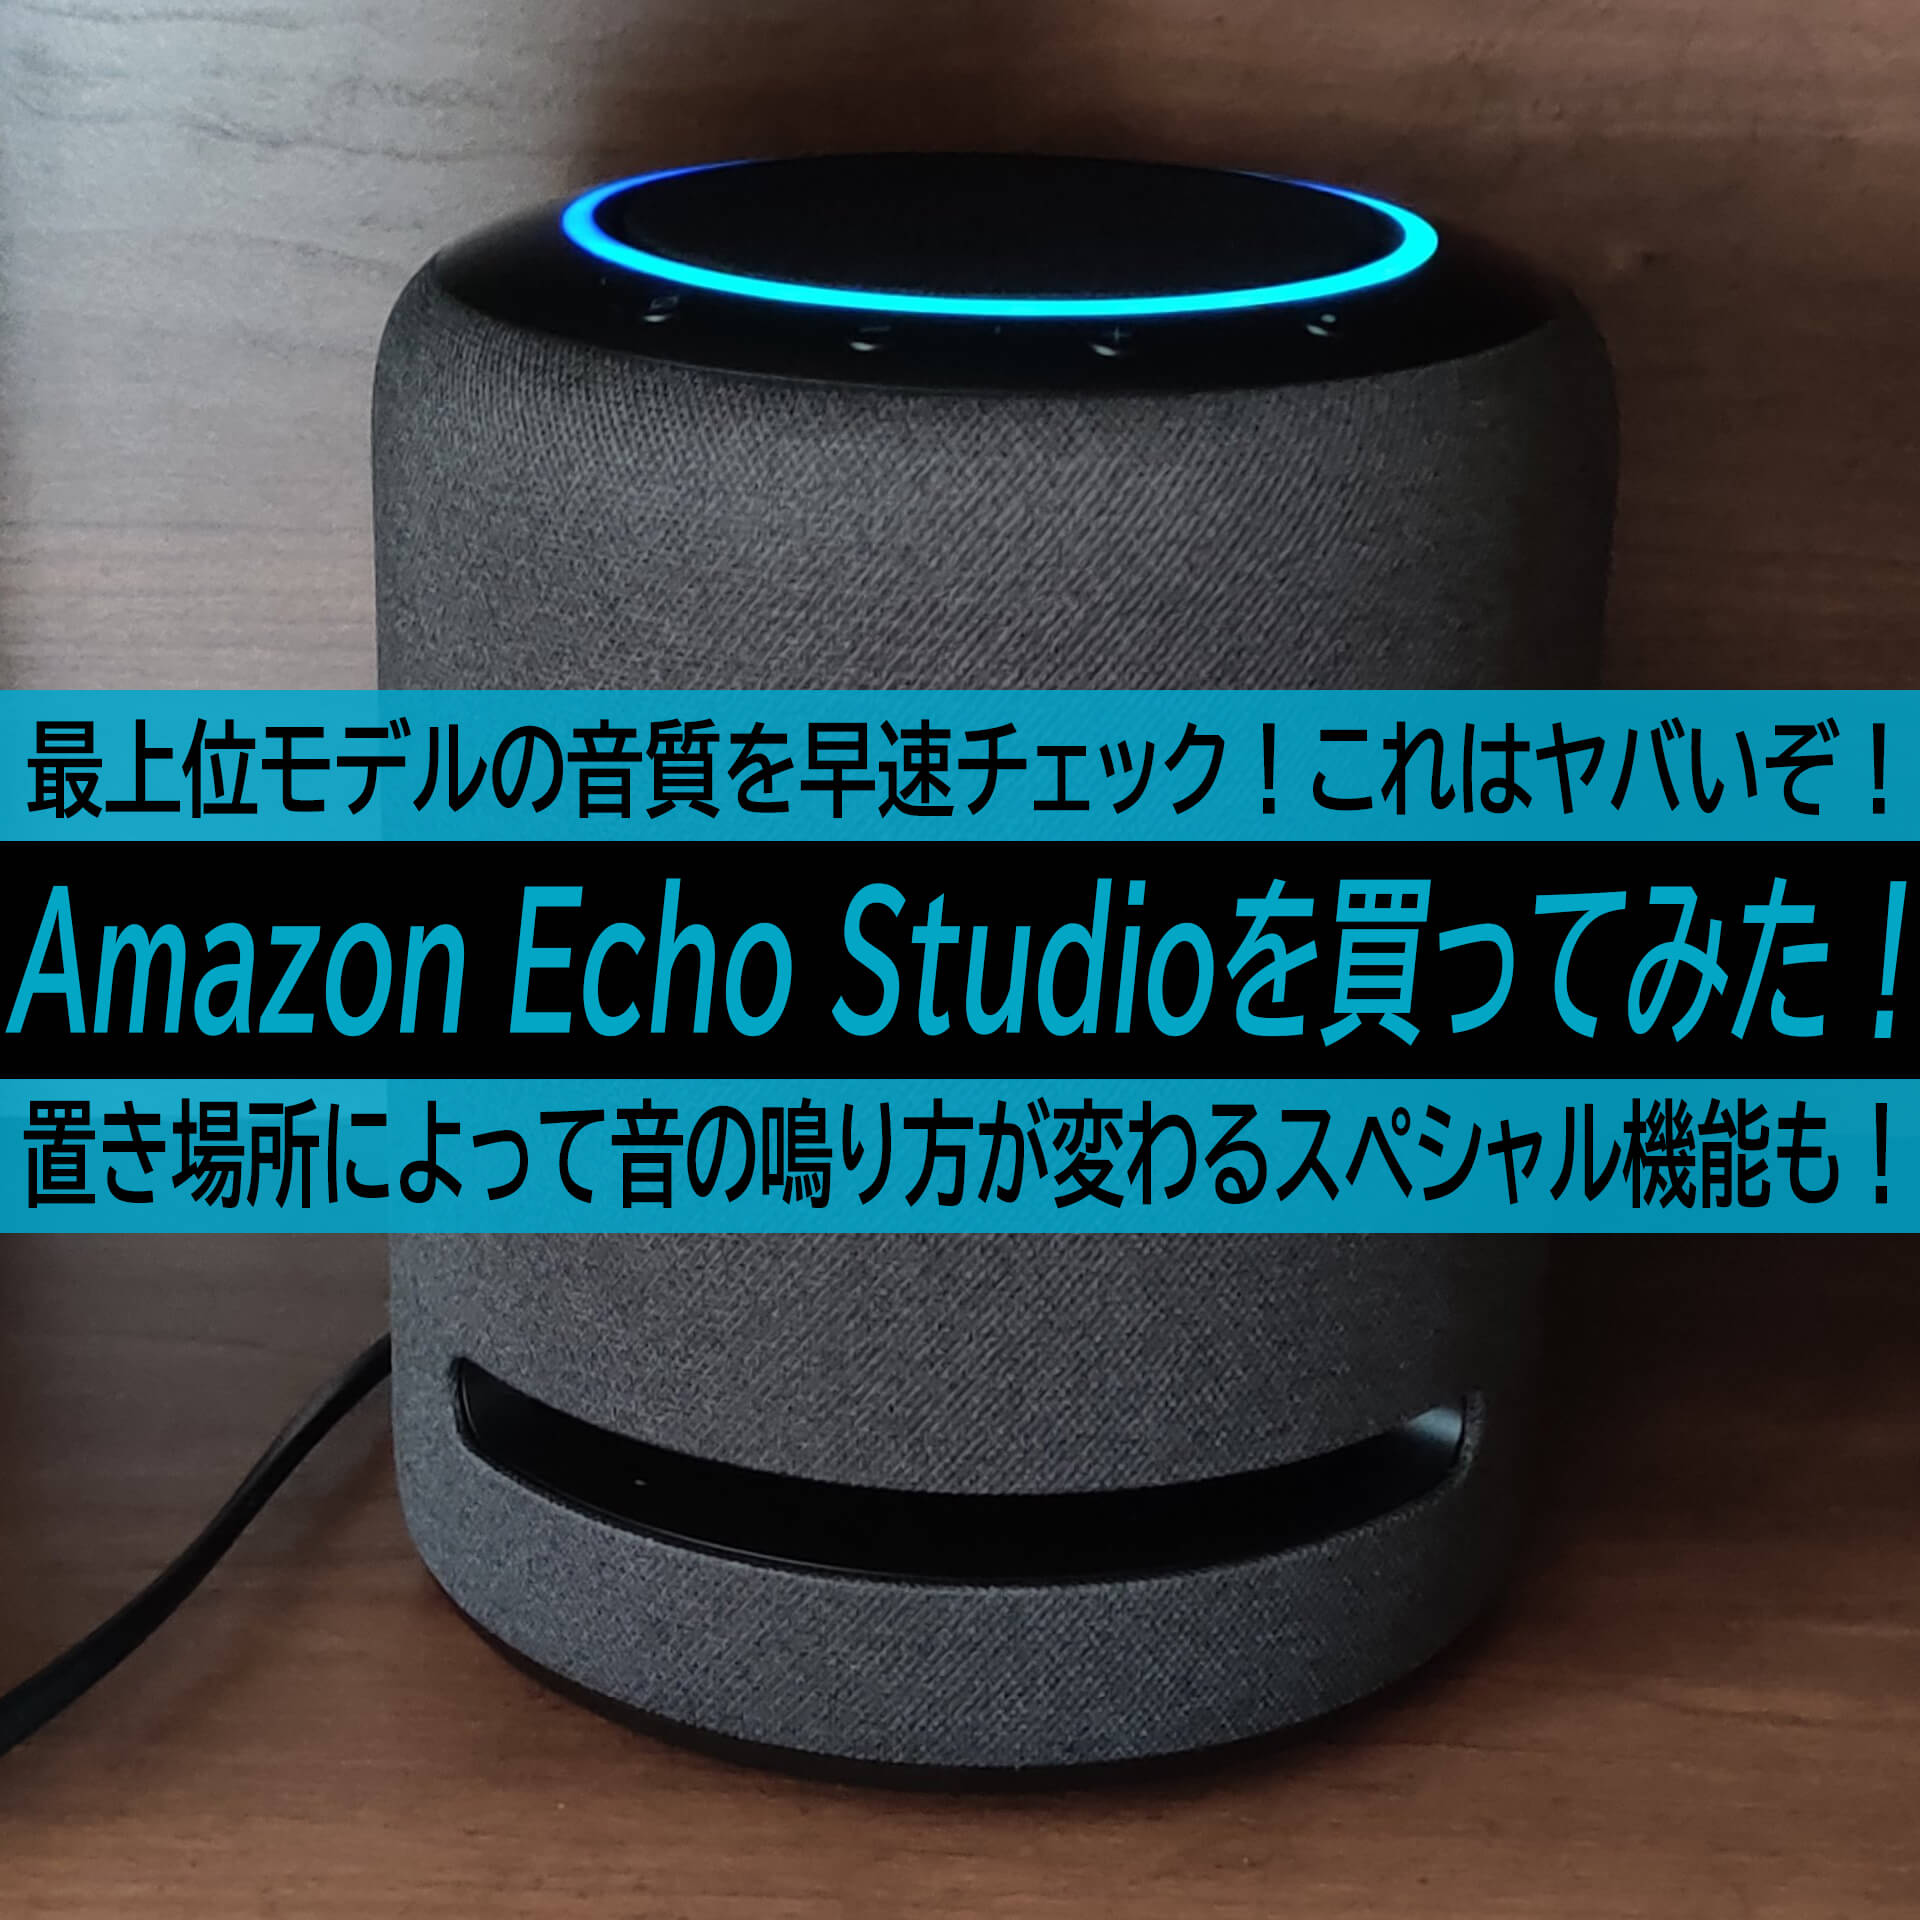 Echo Studio Amazonスピーカー-